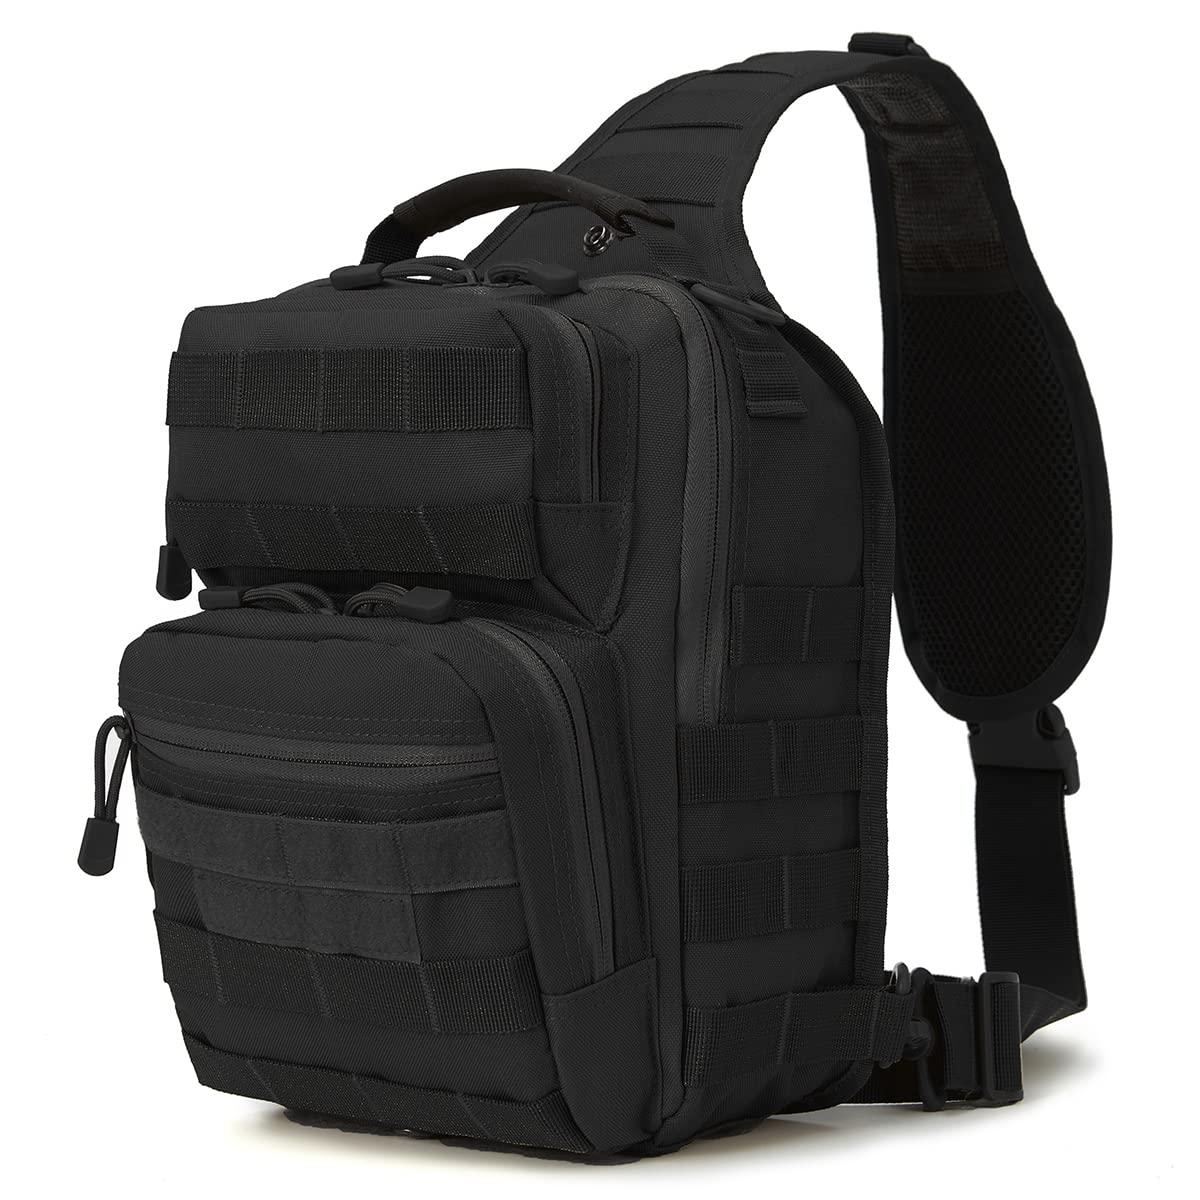 QT&QY Tactical Sling Bag for Men Small Military Rover Shoulder